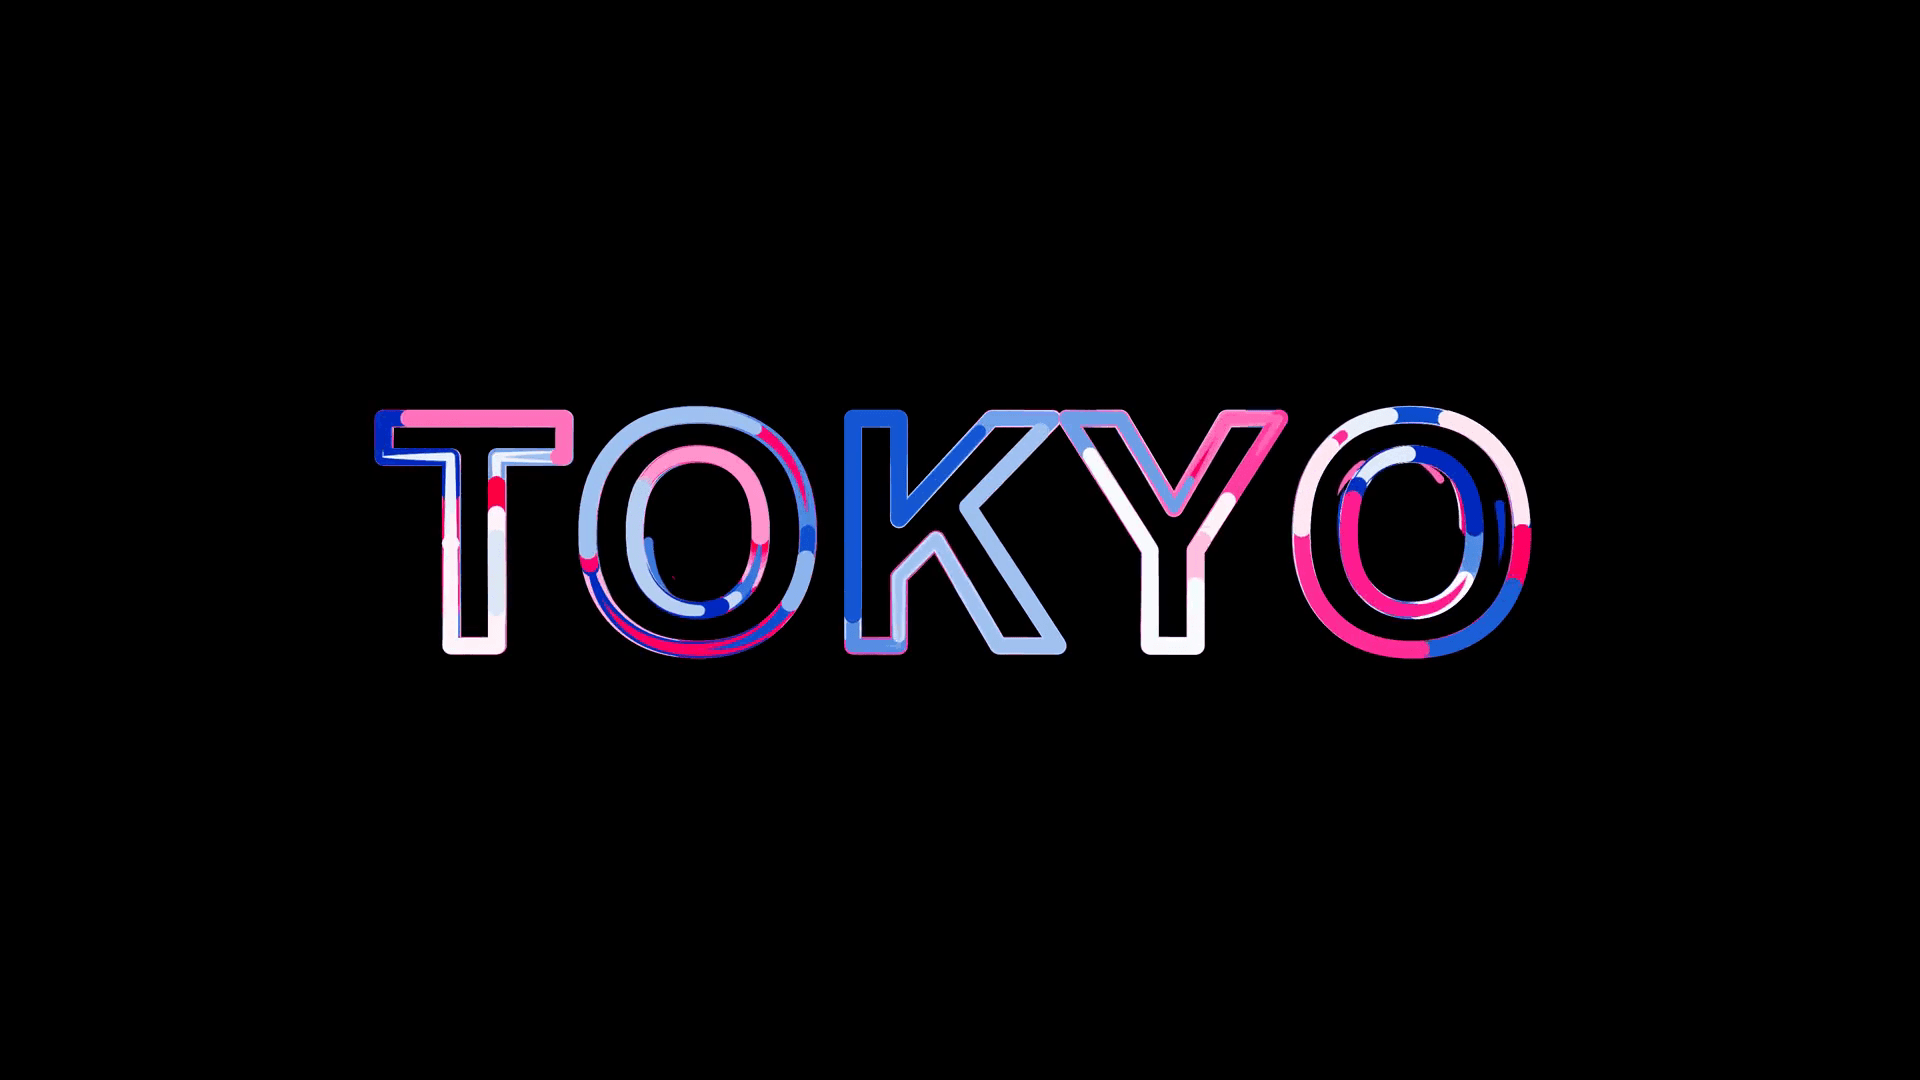 Tokyo Word Wallpaper Free Tokyo Word Background